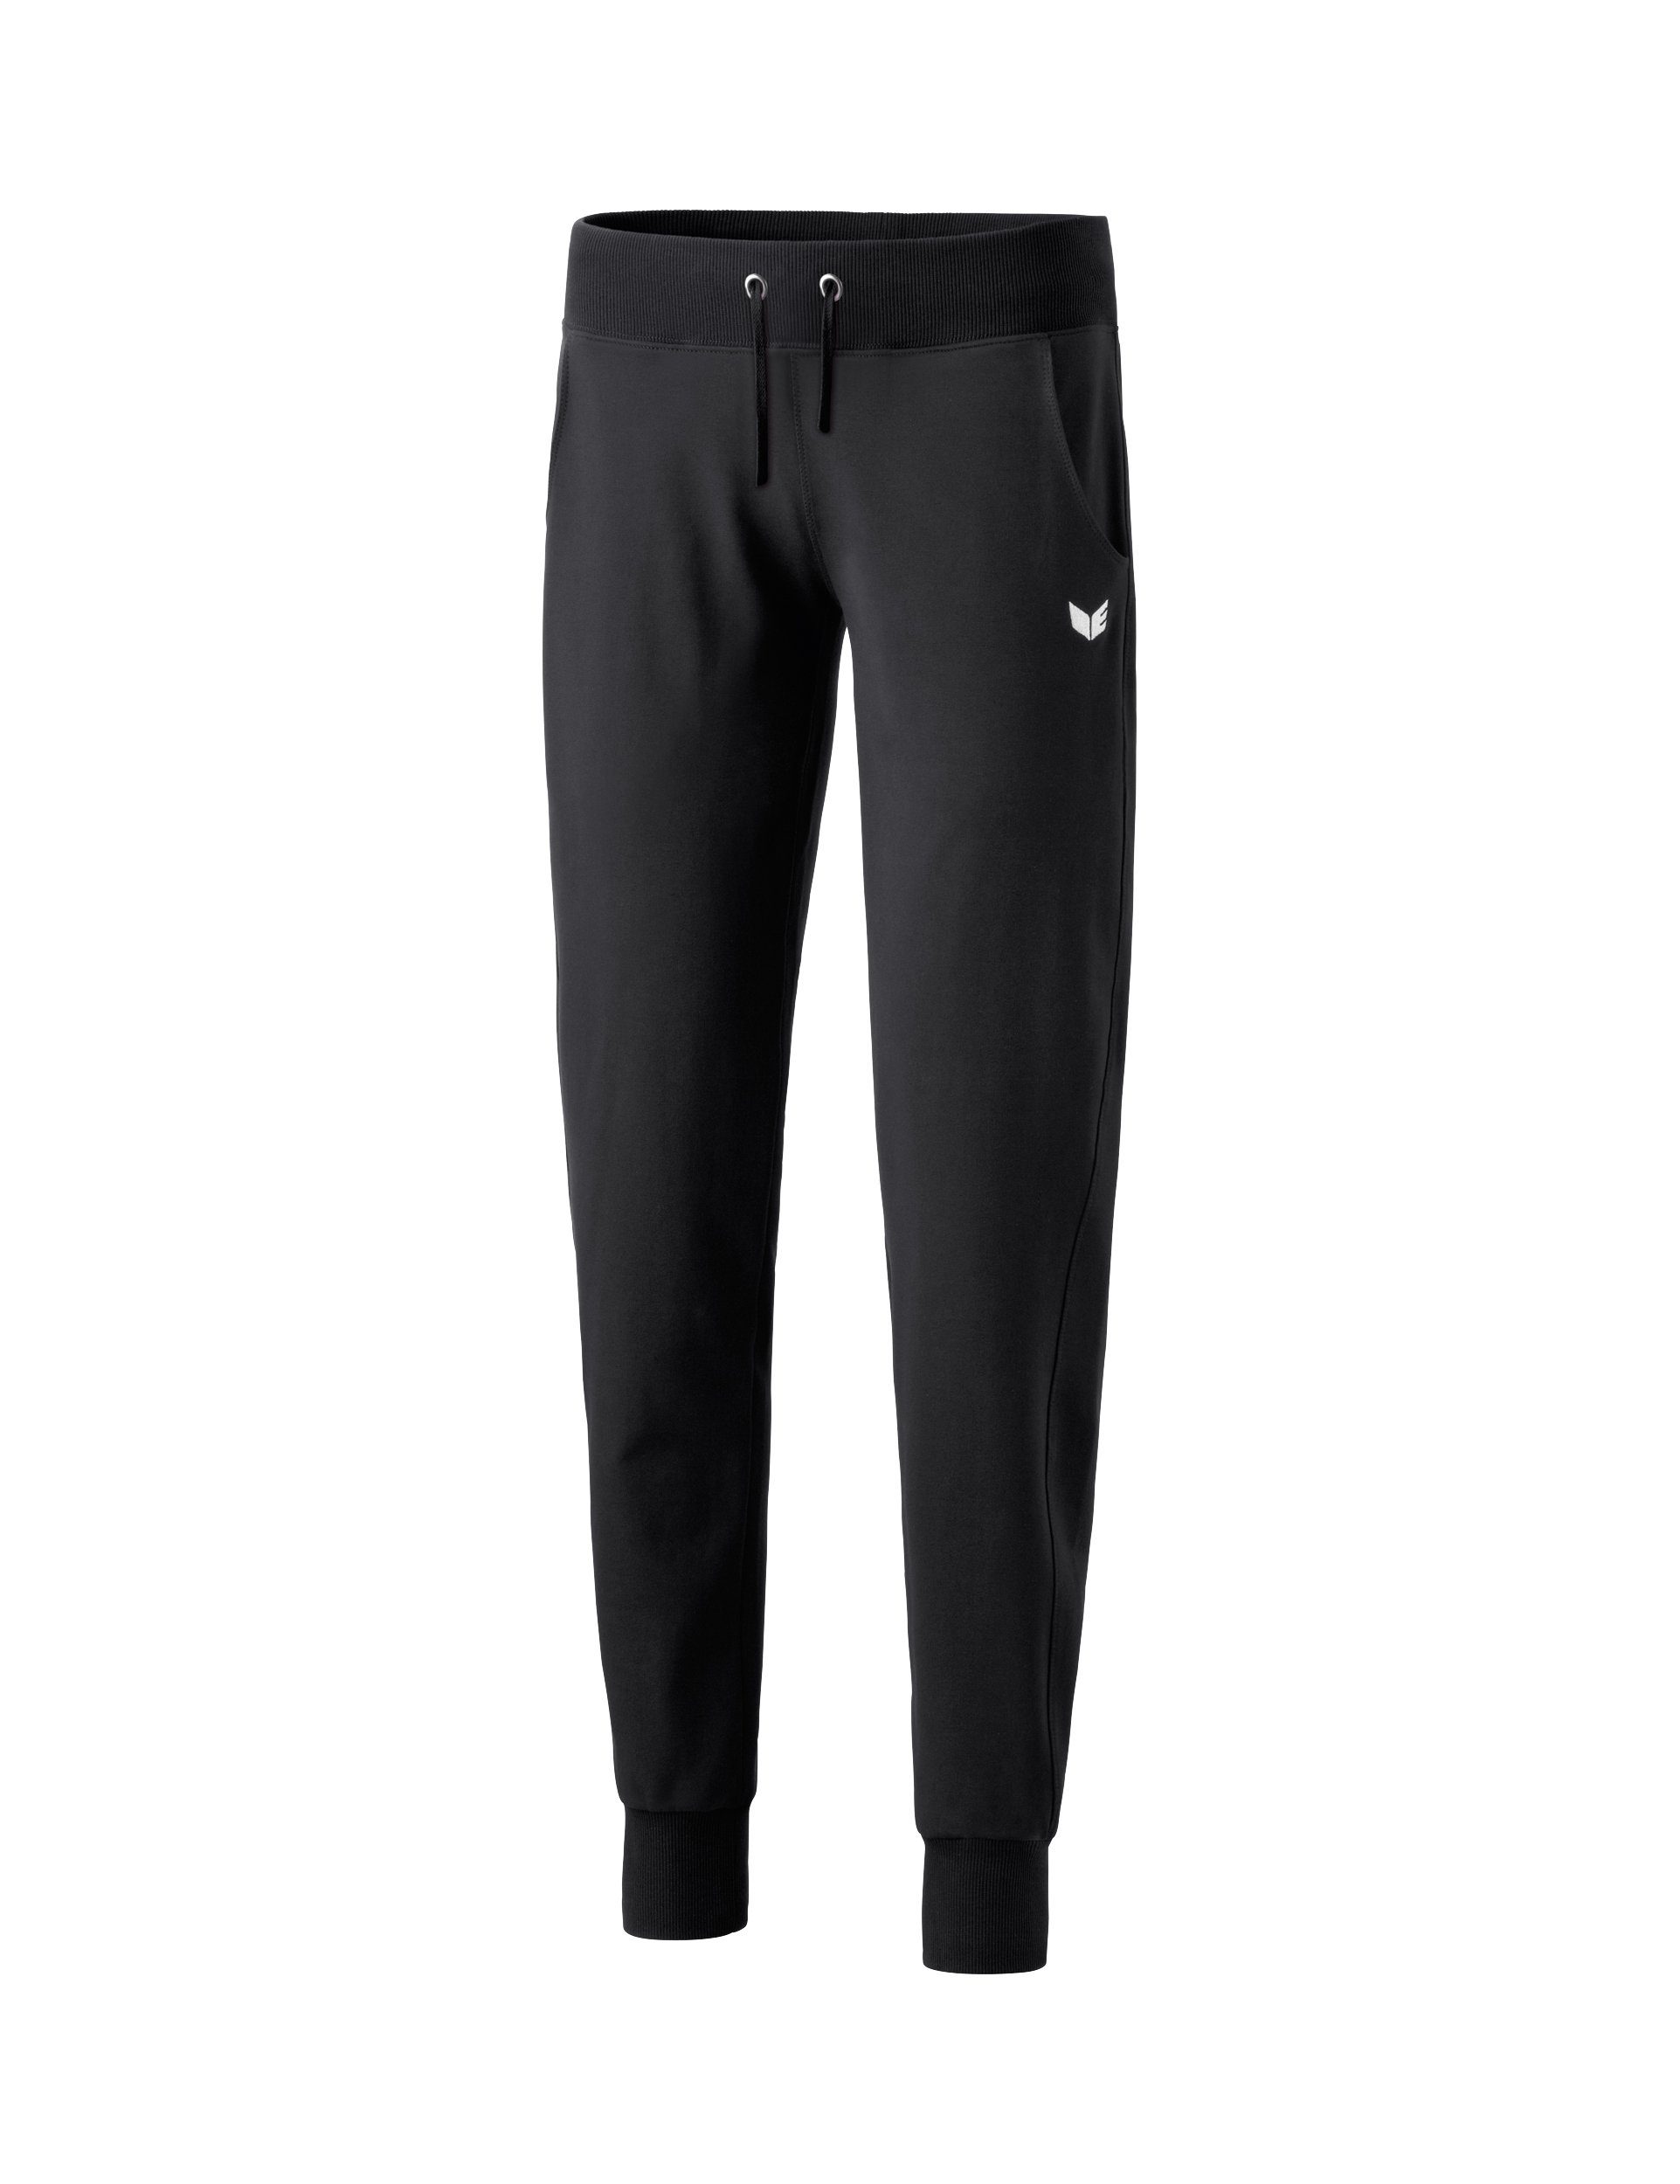 Erima Sporthose cuff sweatpants with black